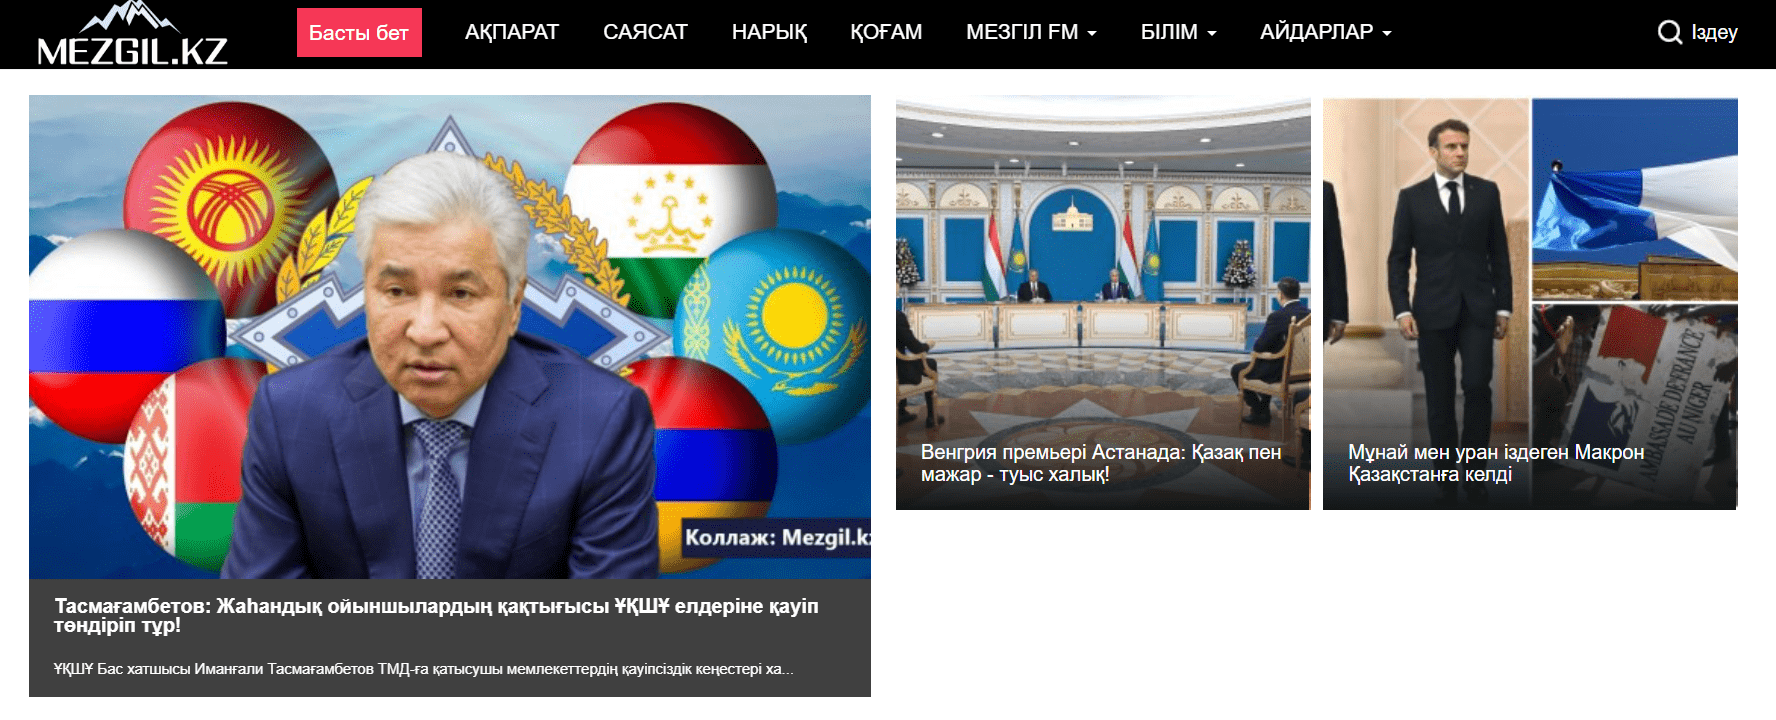 Mezgil.kz - официальный сайт